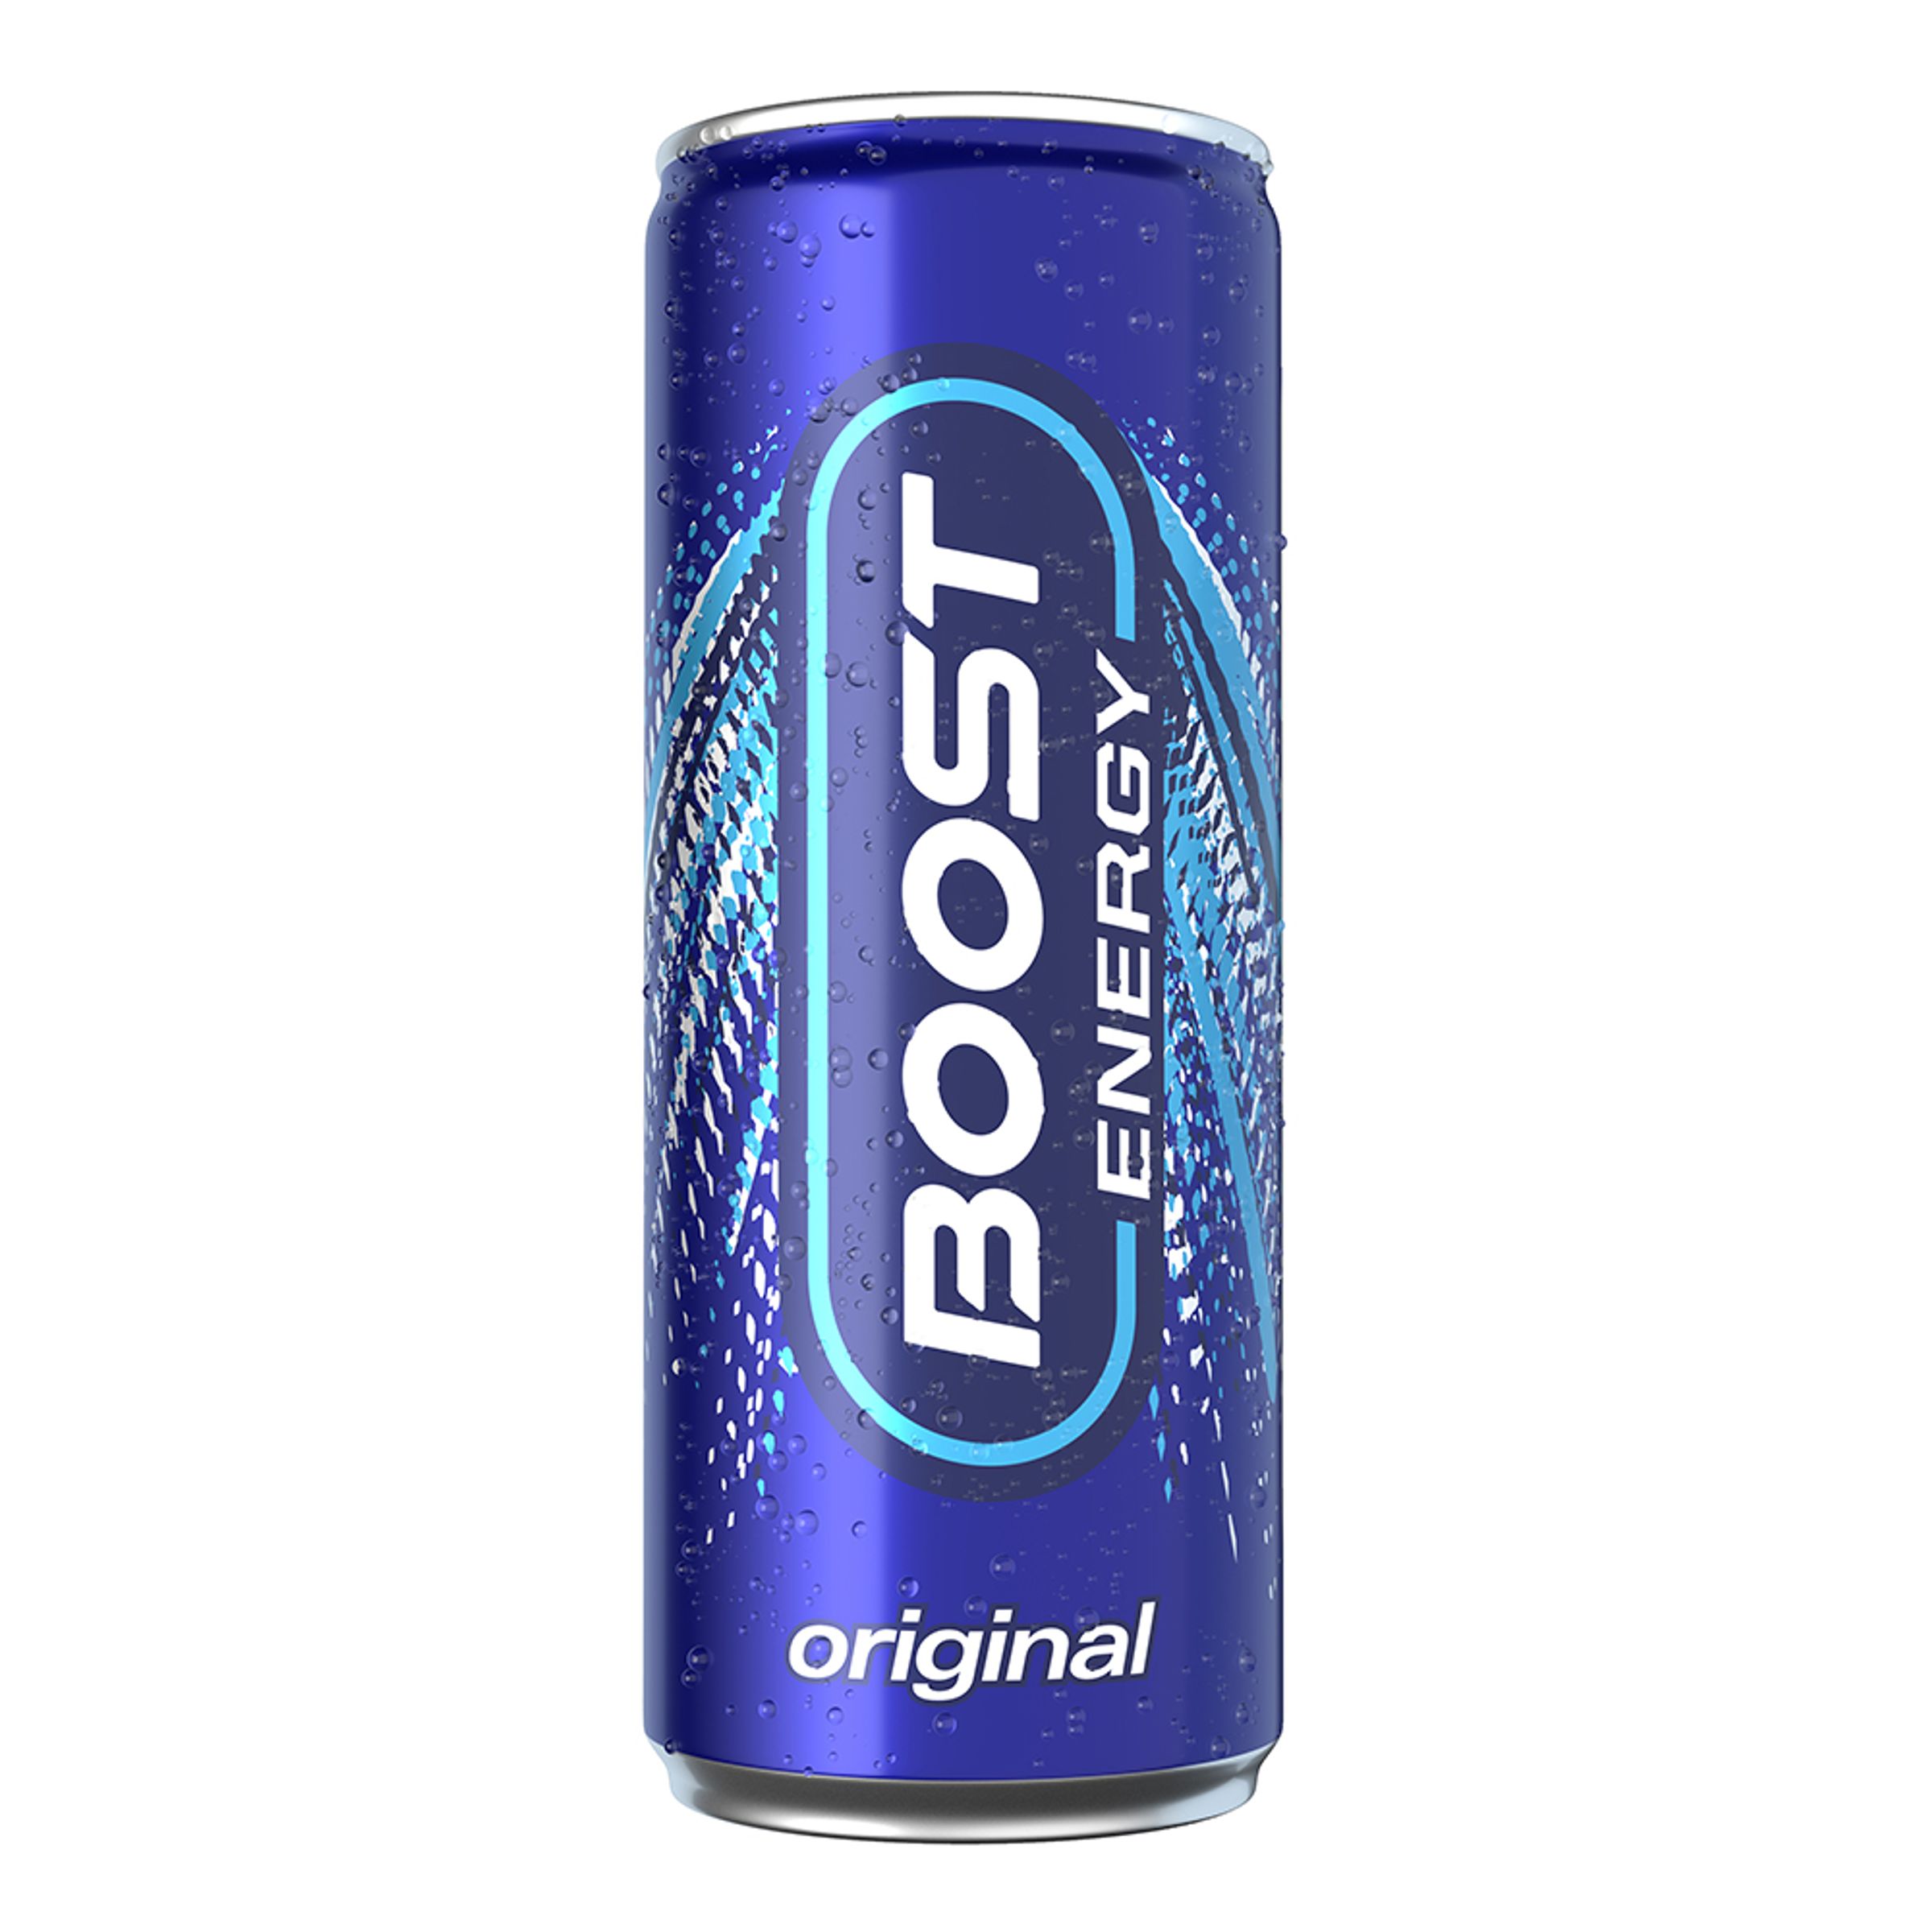 Boost Energy Energidryck - 1-pack